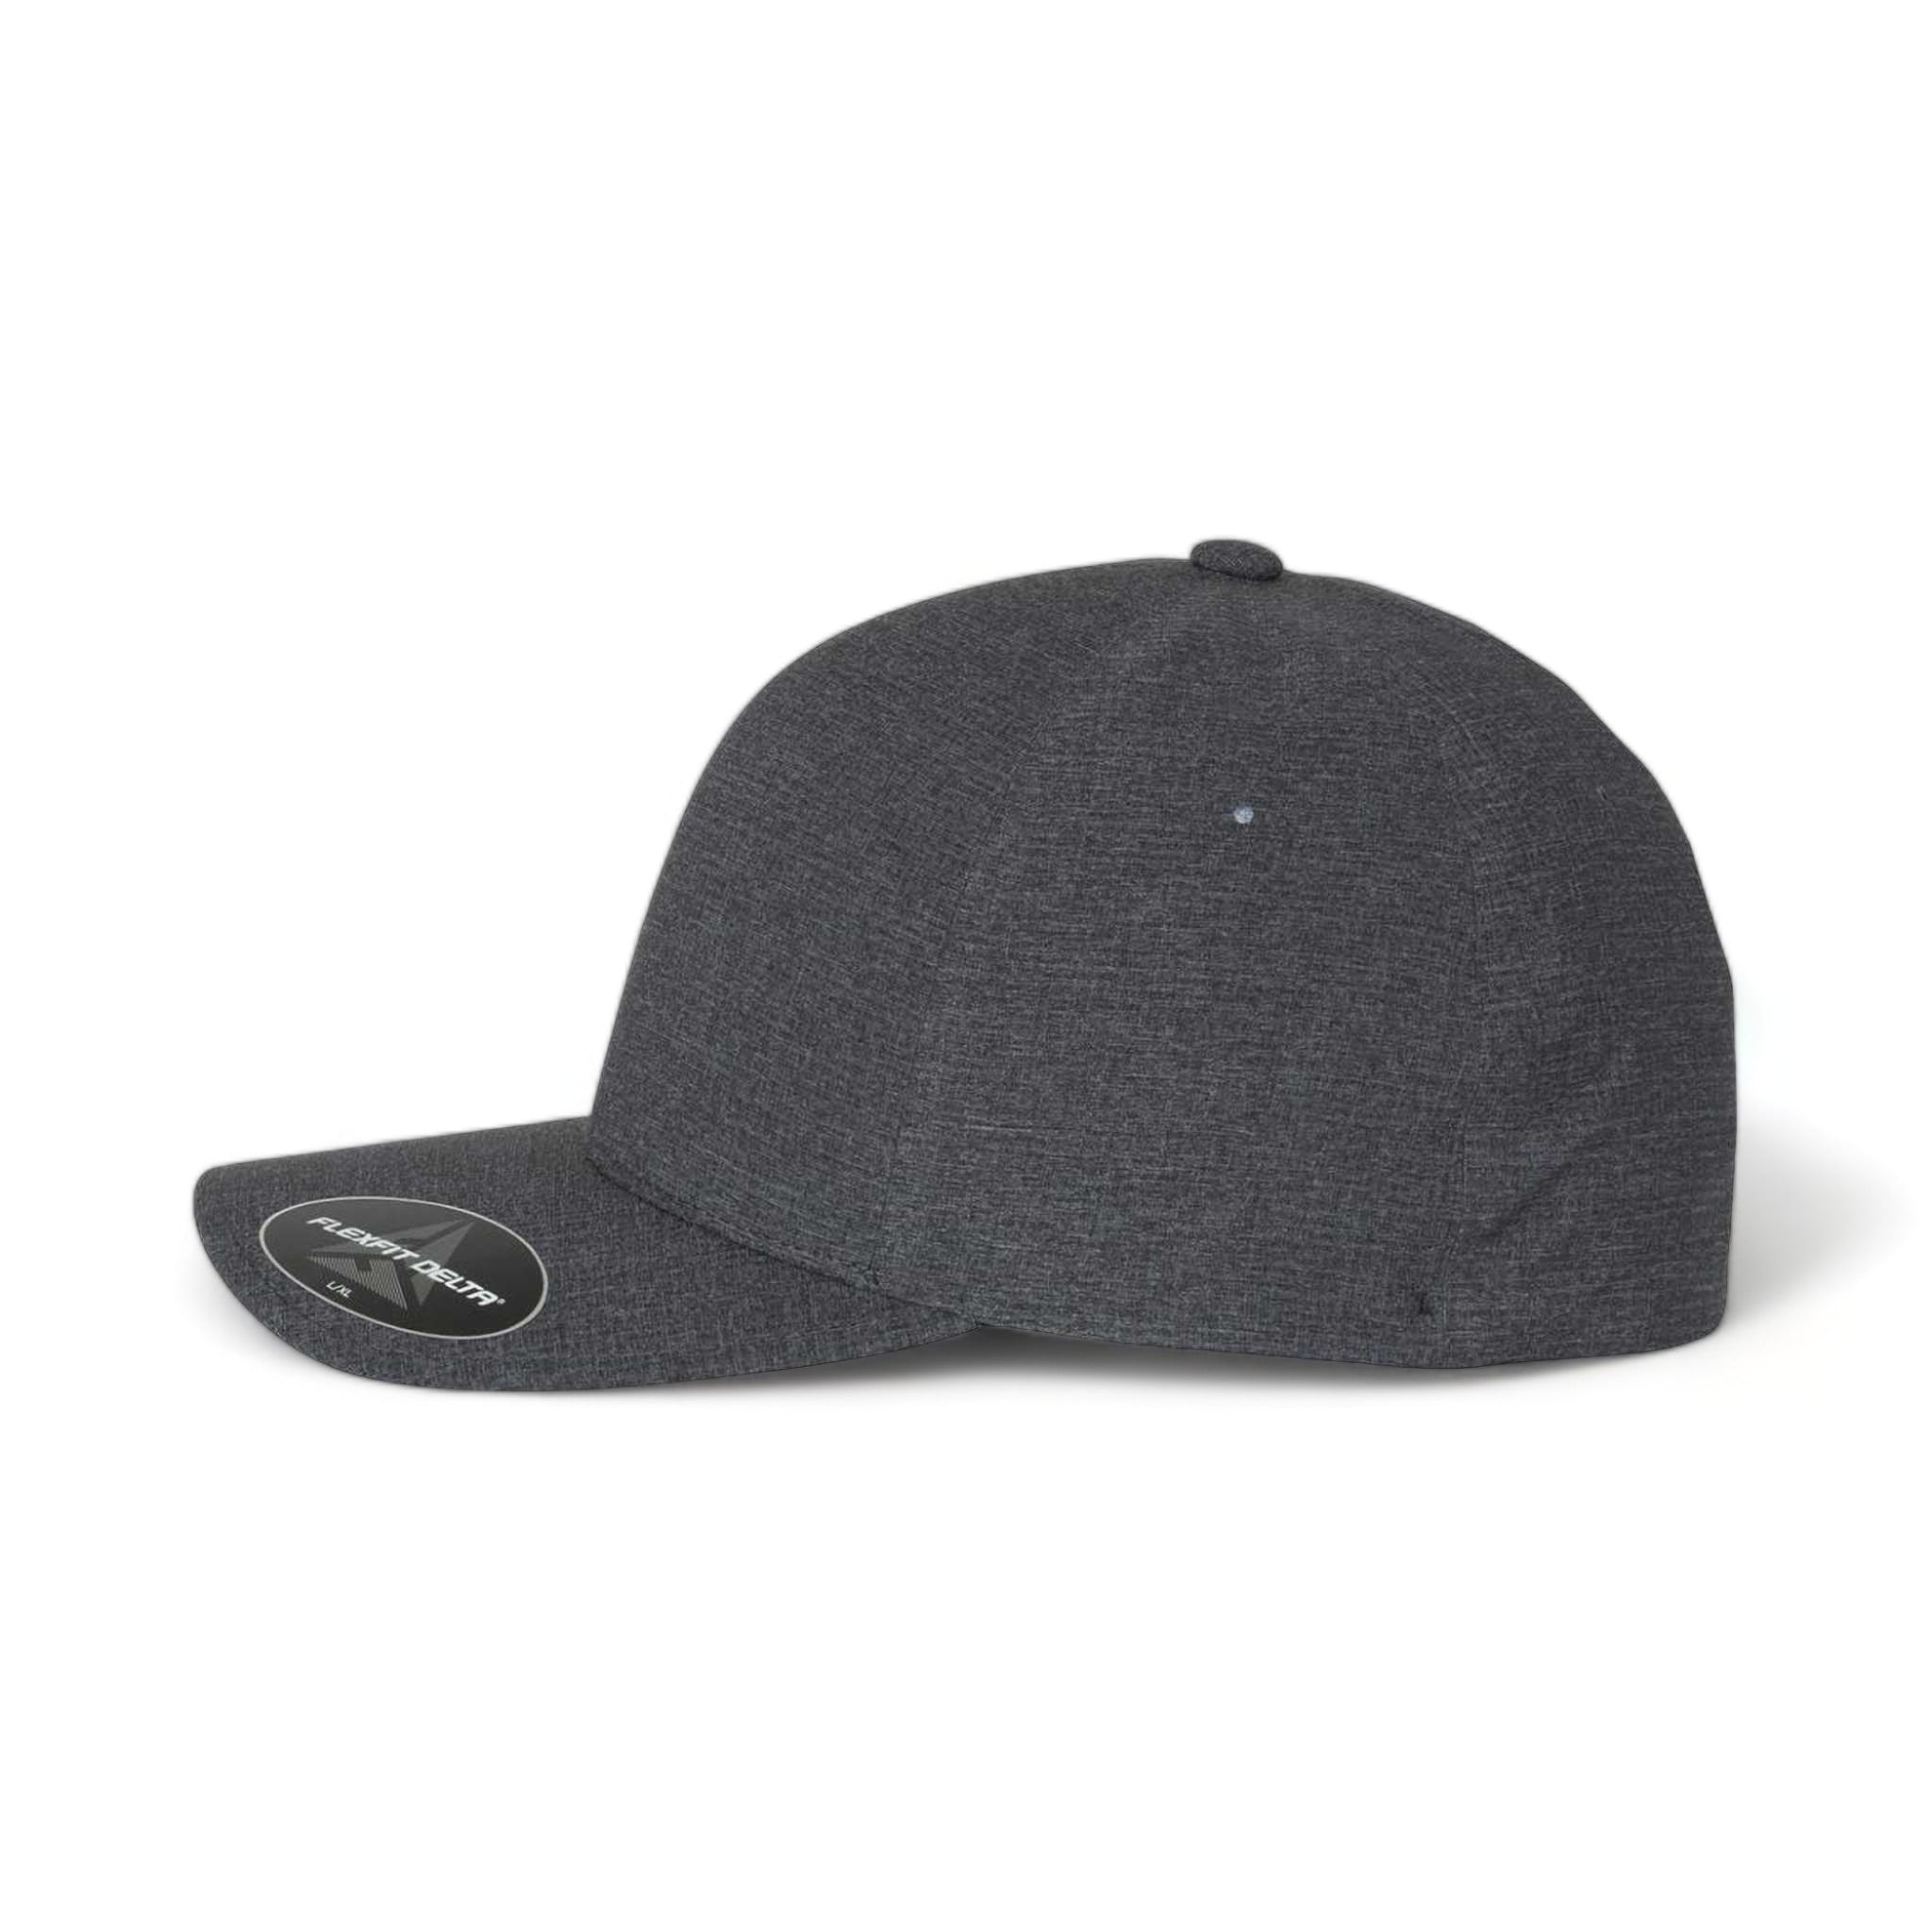 Side view of Flexfit 180 custom hat in mélange charcoal